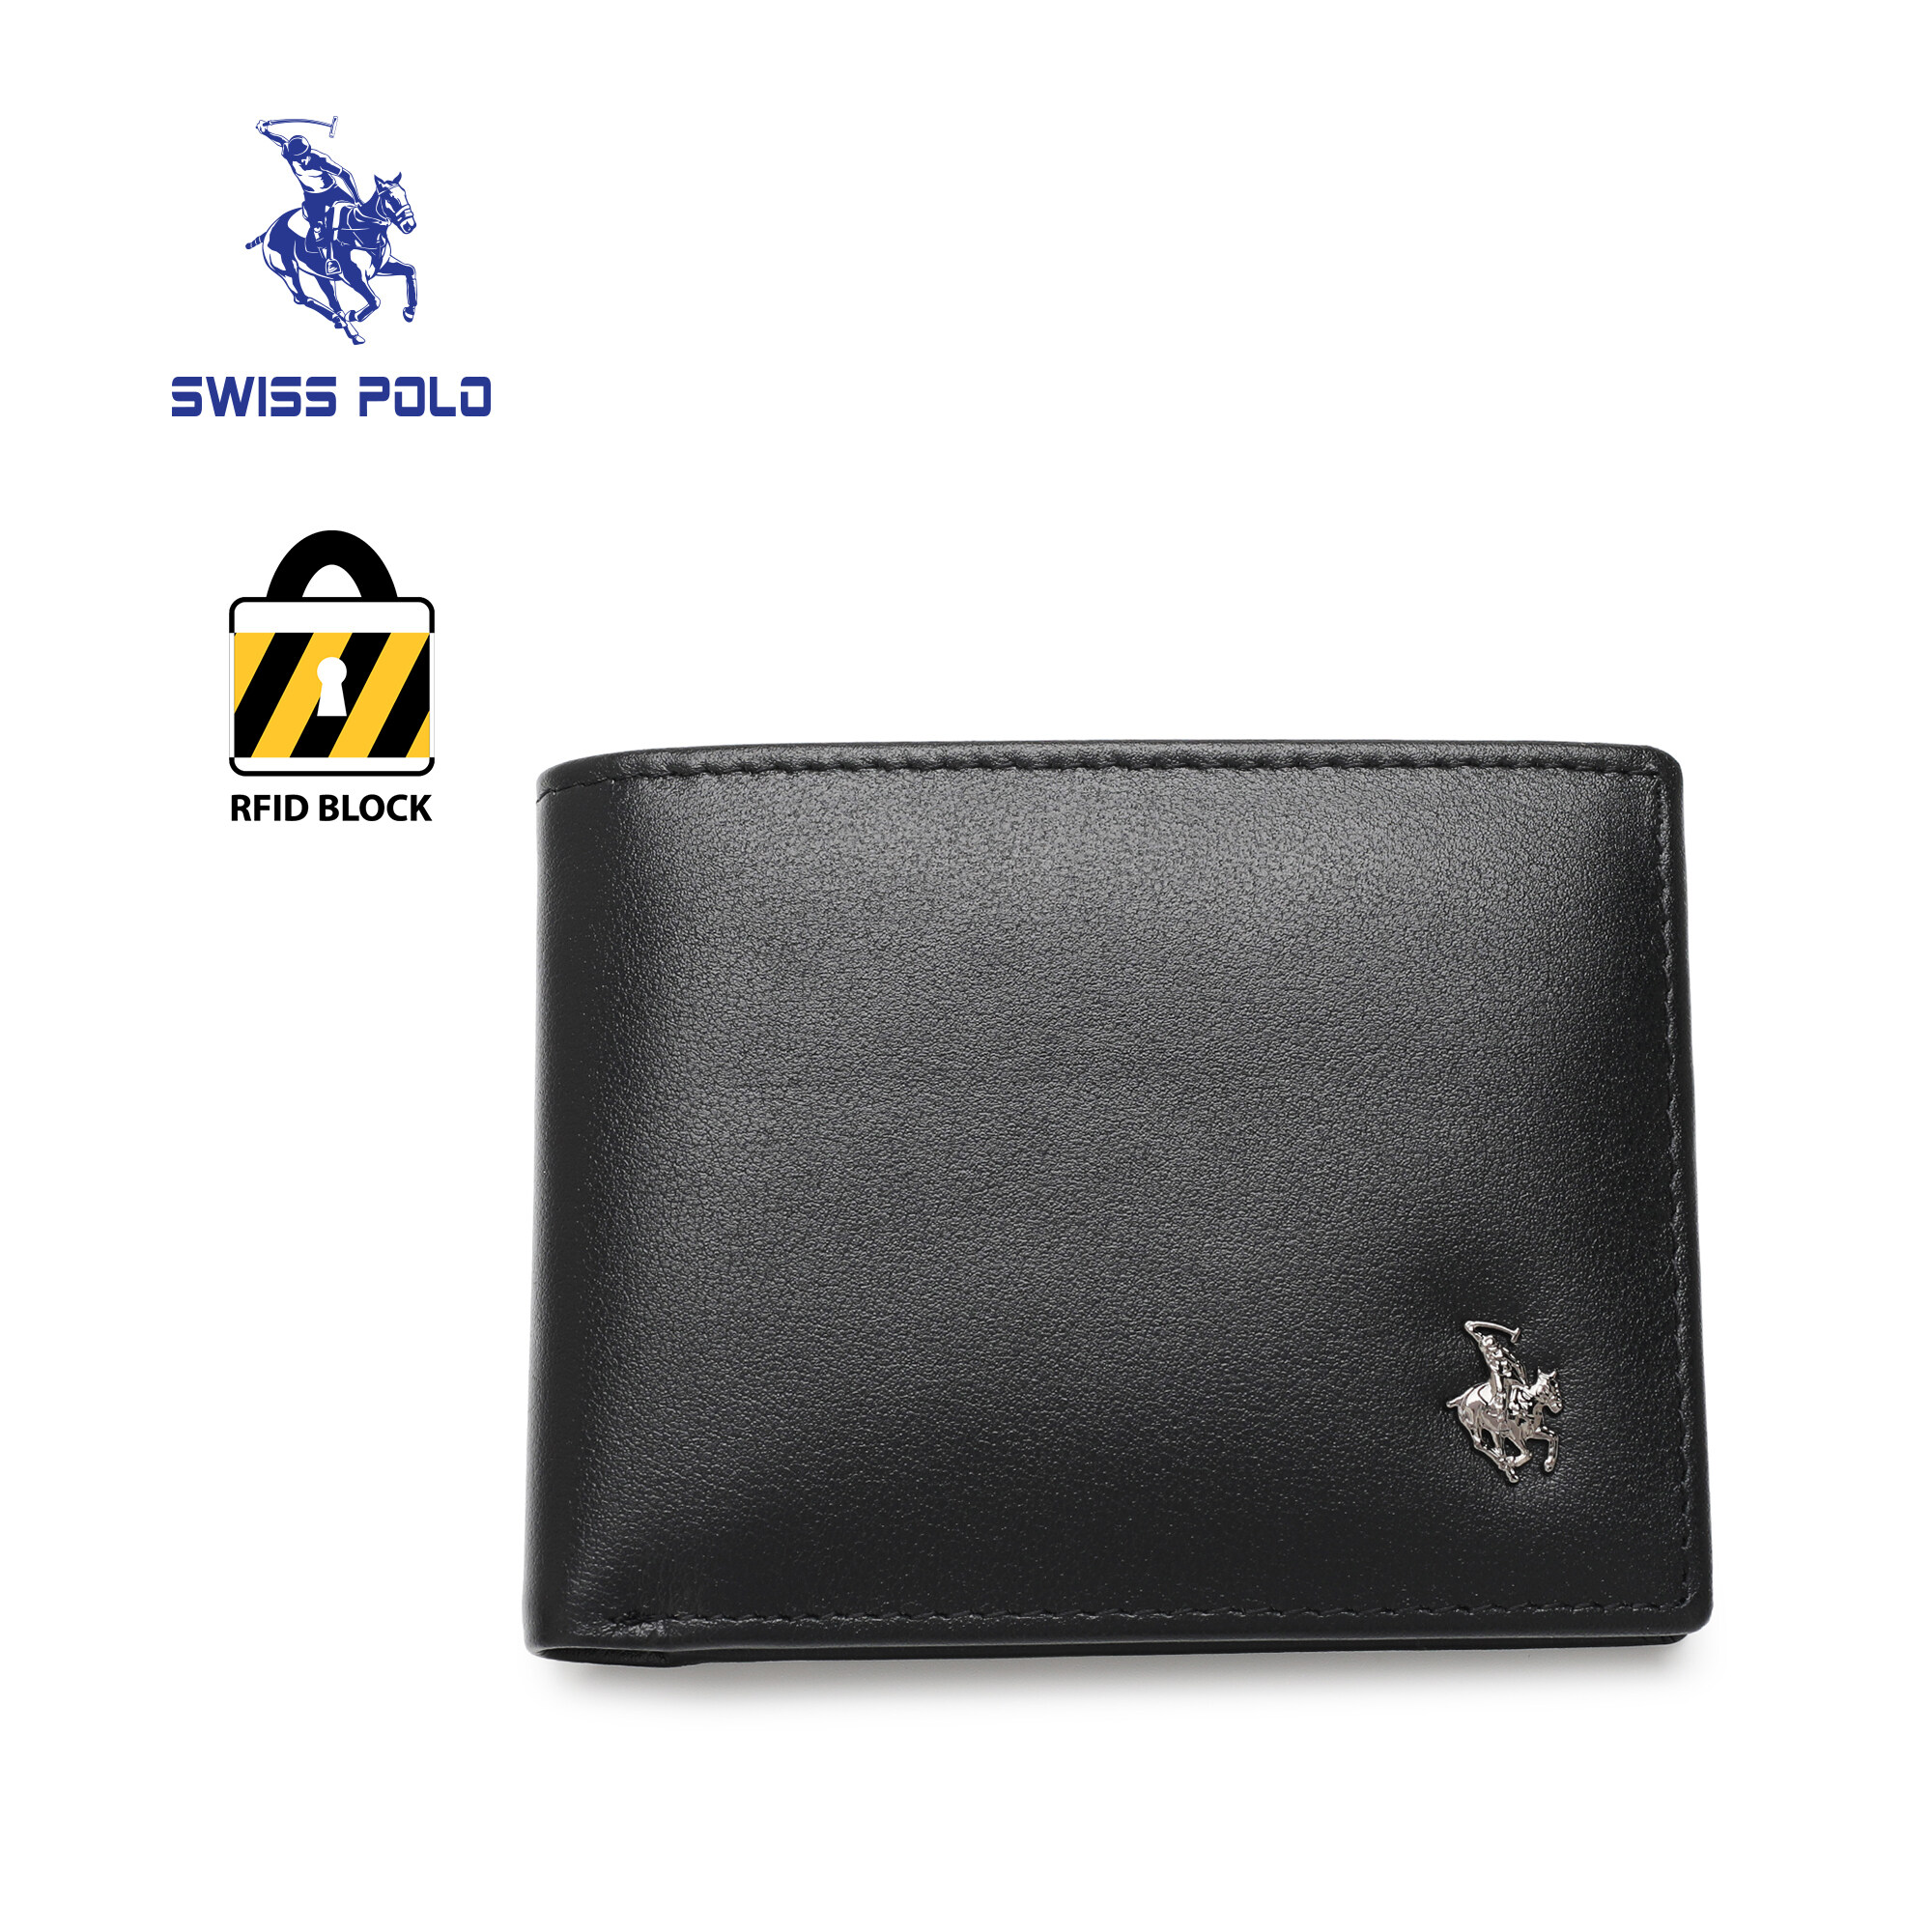 SWISS POLO Genuine Leather RFID Short Wallet SW 167-9 BLACK